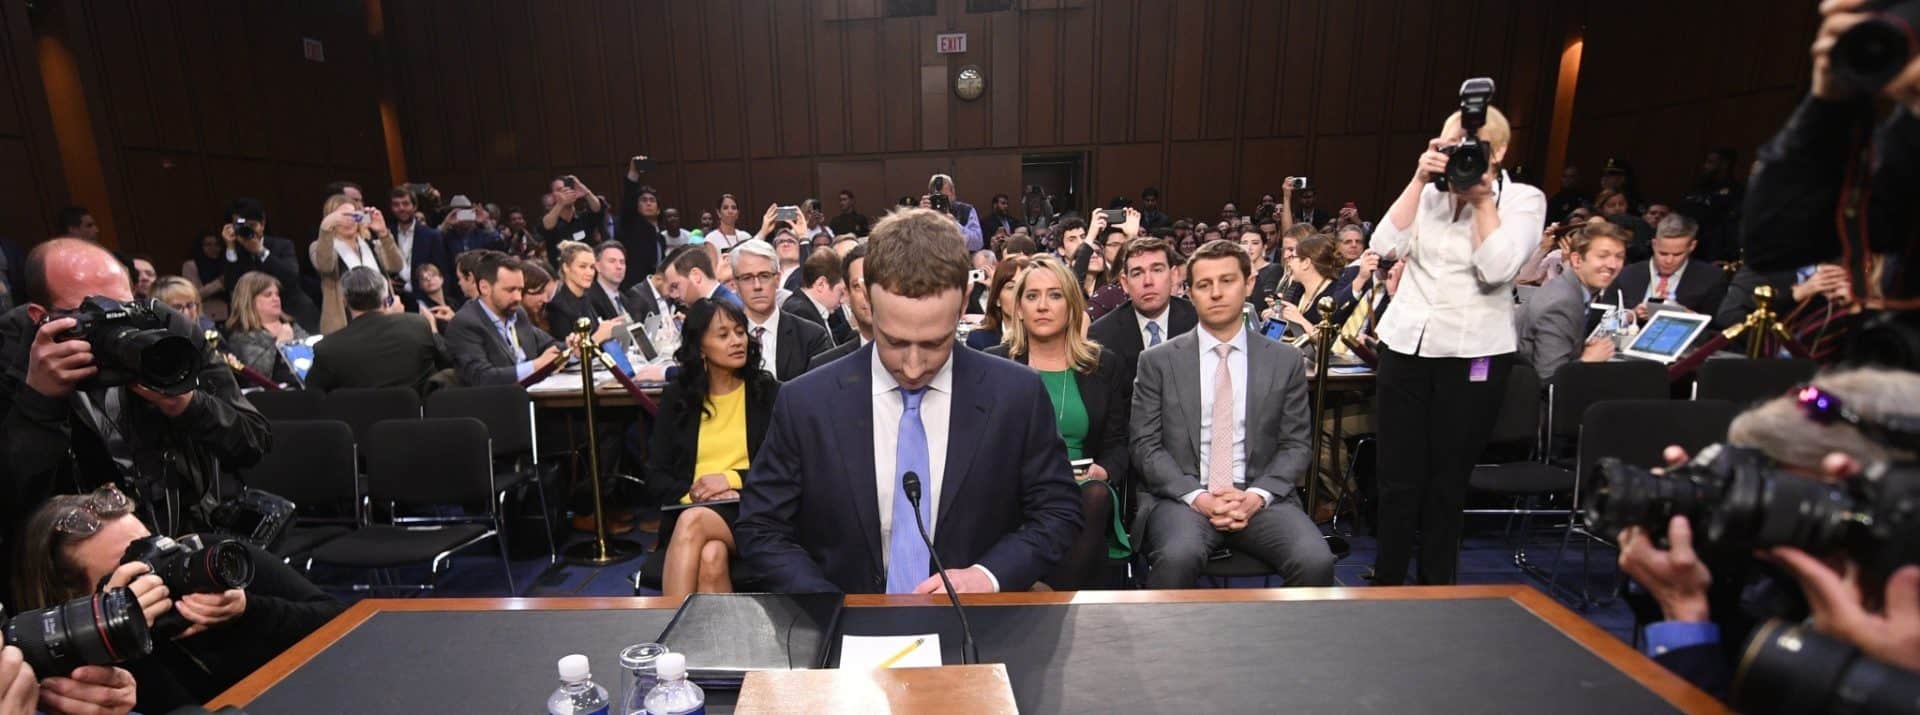 Peur de parler en public ou glossophobie - Mark Zuckerberg, PDG Facebook